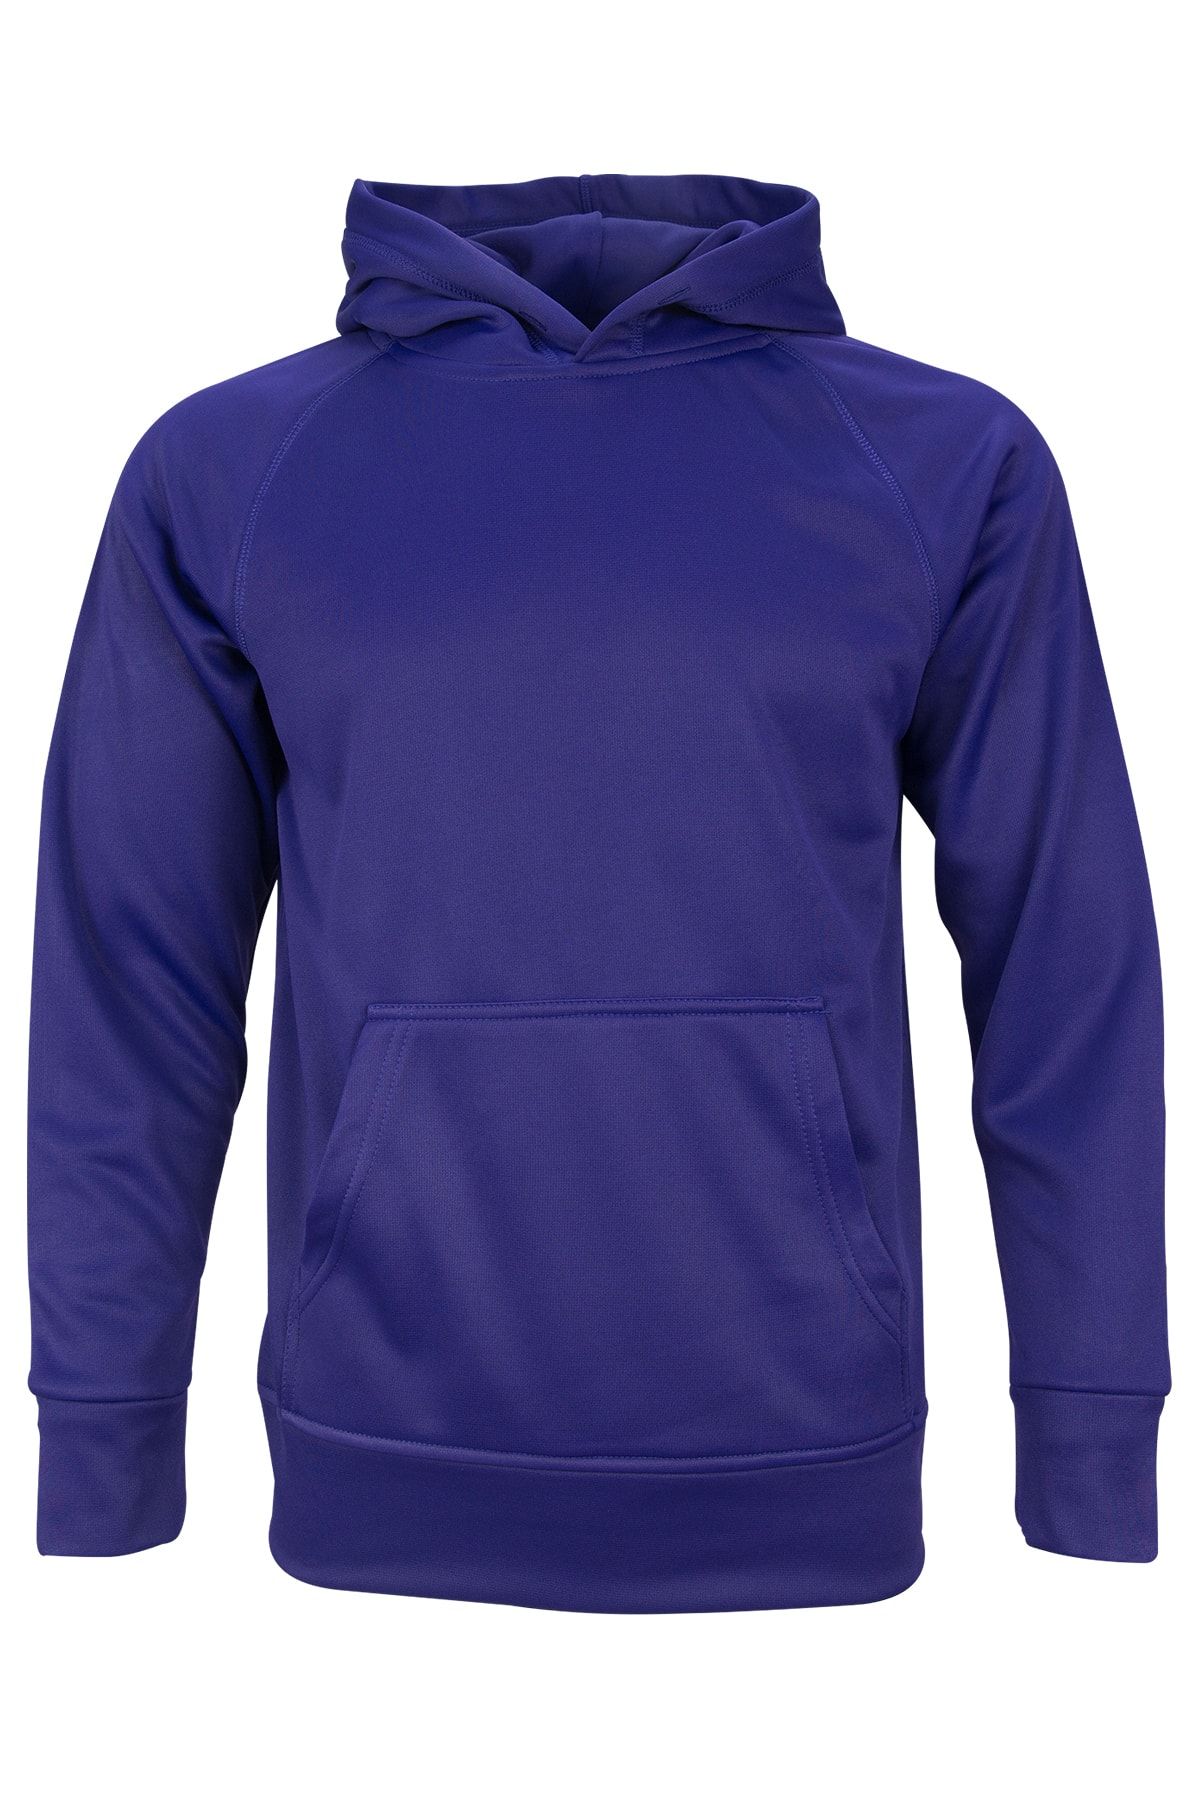 Fimerang Unisex Spor Sweatshirt- Basic Fleece Hoodie